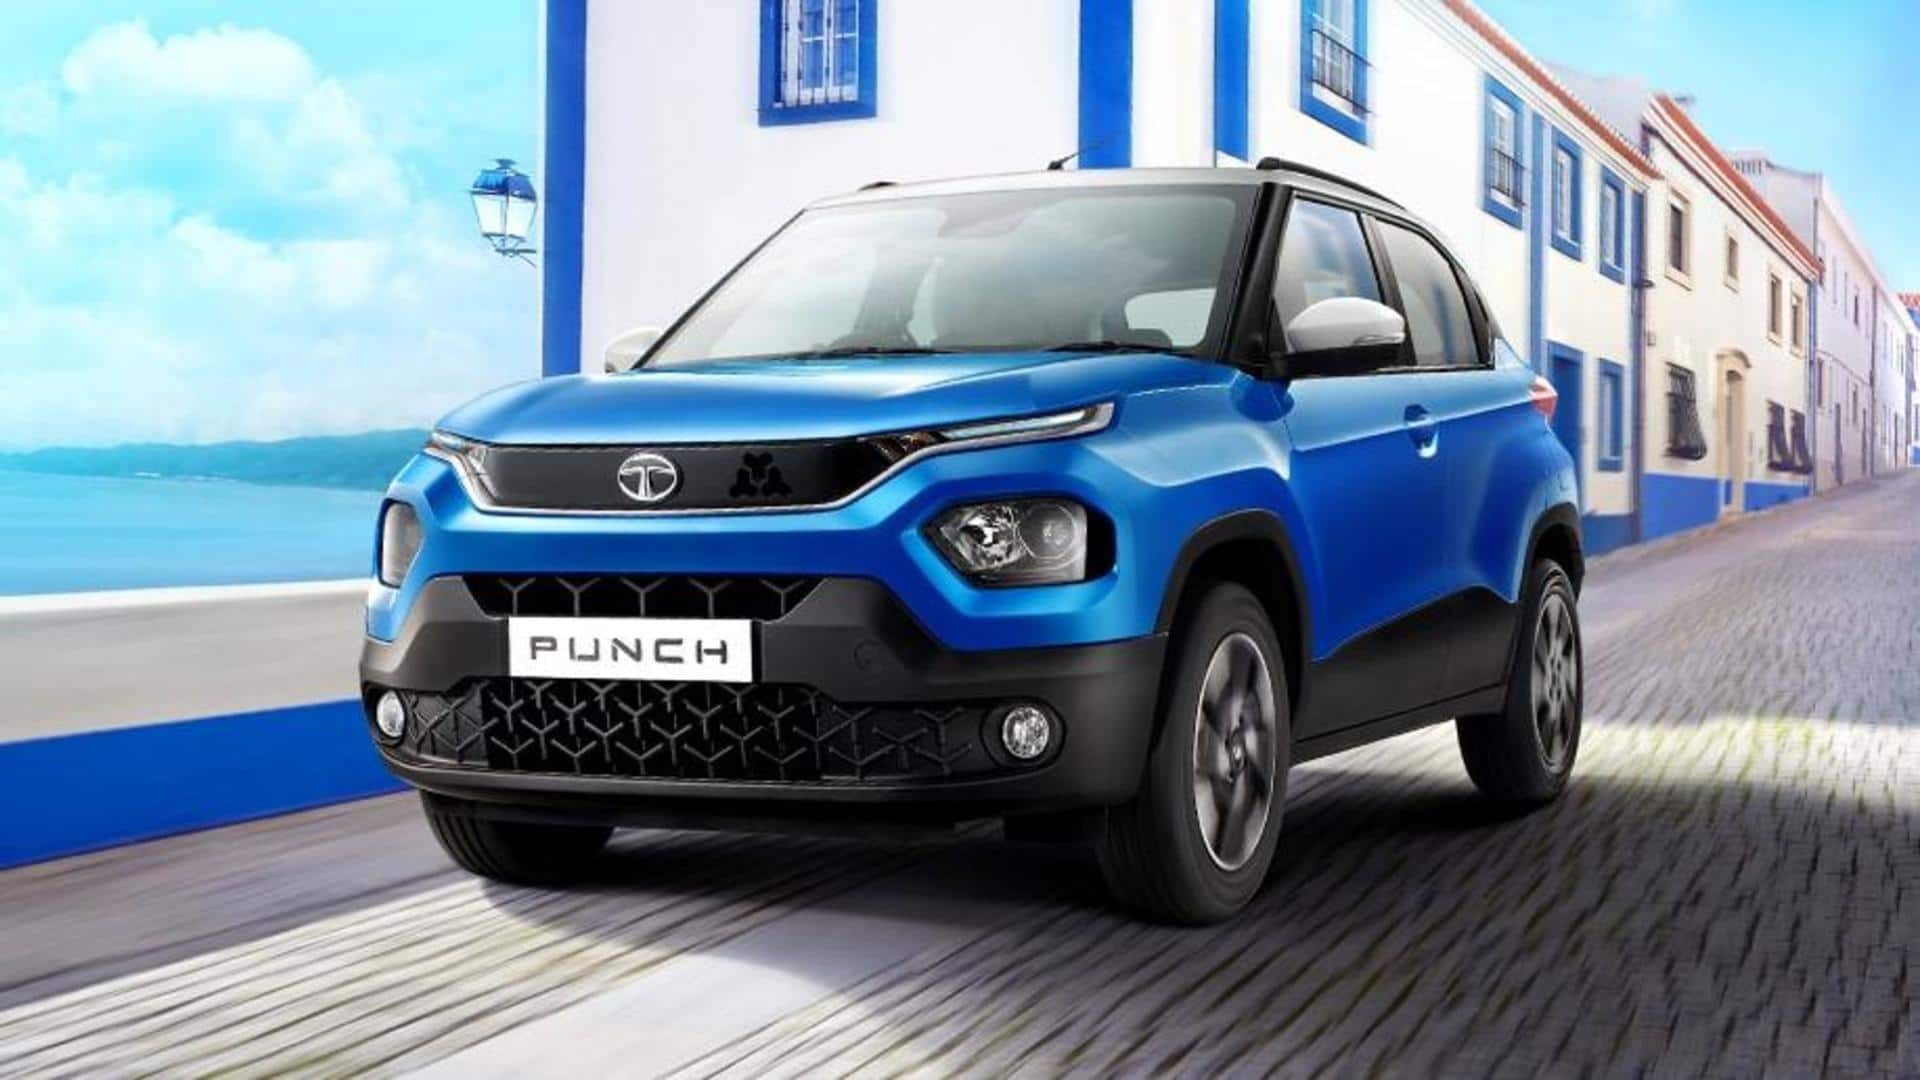 Tata Punch EV's latest spy shots reveal interior, design features